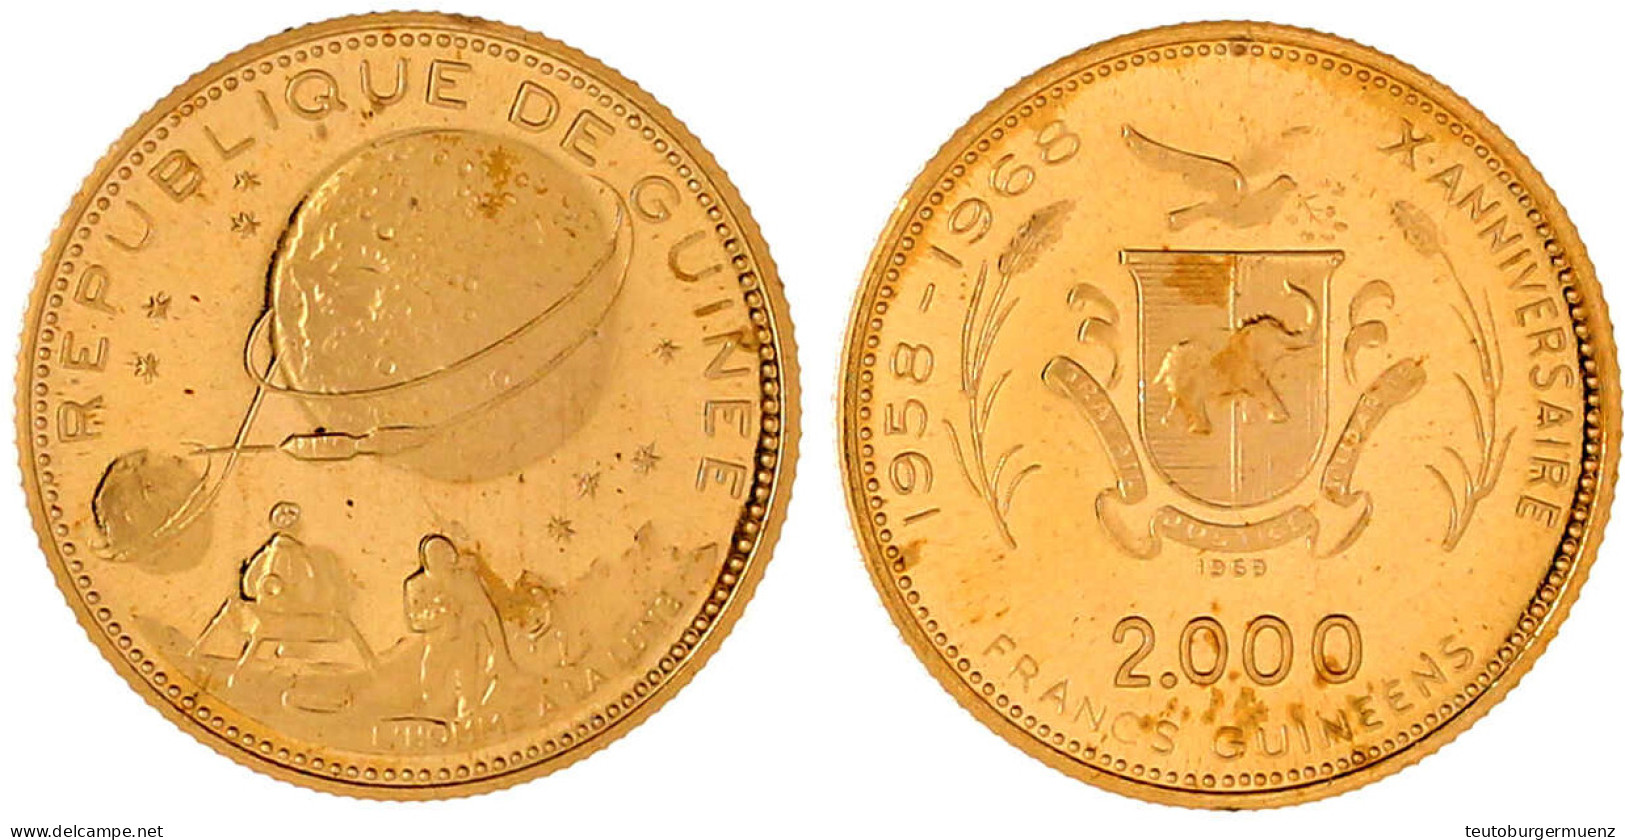 2000 Francs 1969, Mondlandung. 8,00 G. 900/1000. Polierte Platte. Krause/Mishler 18. - Guinea